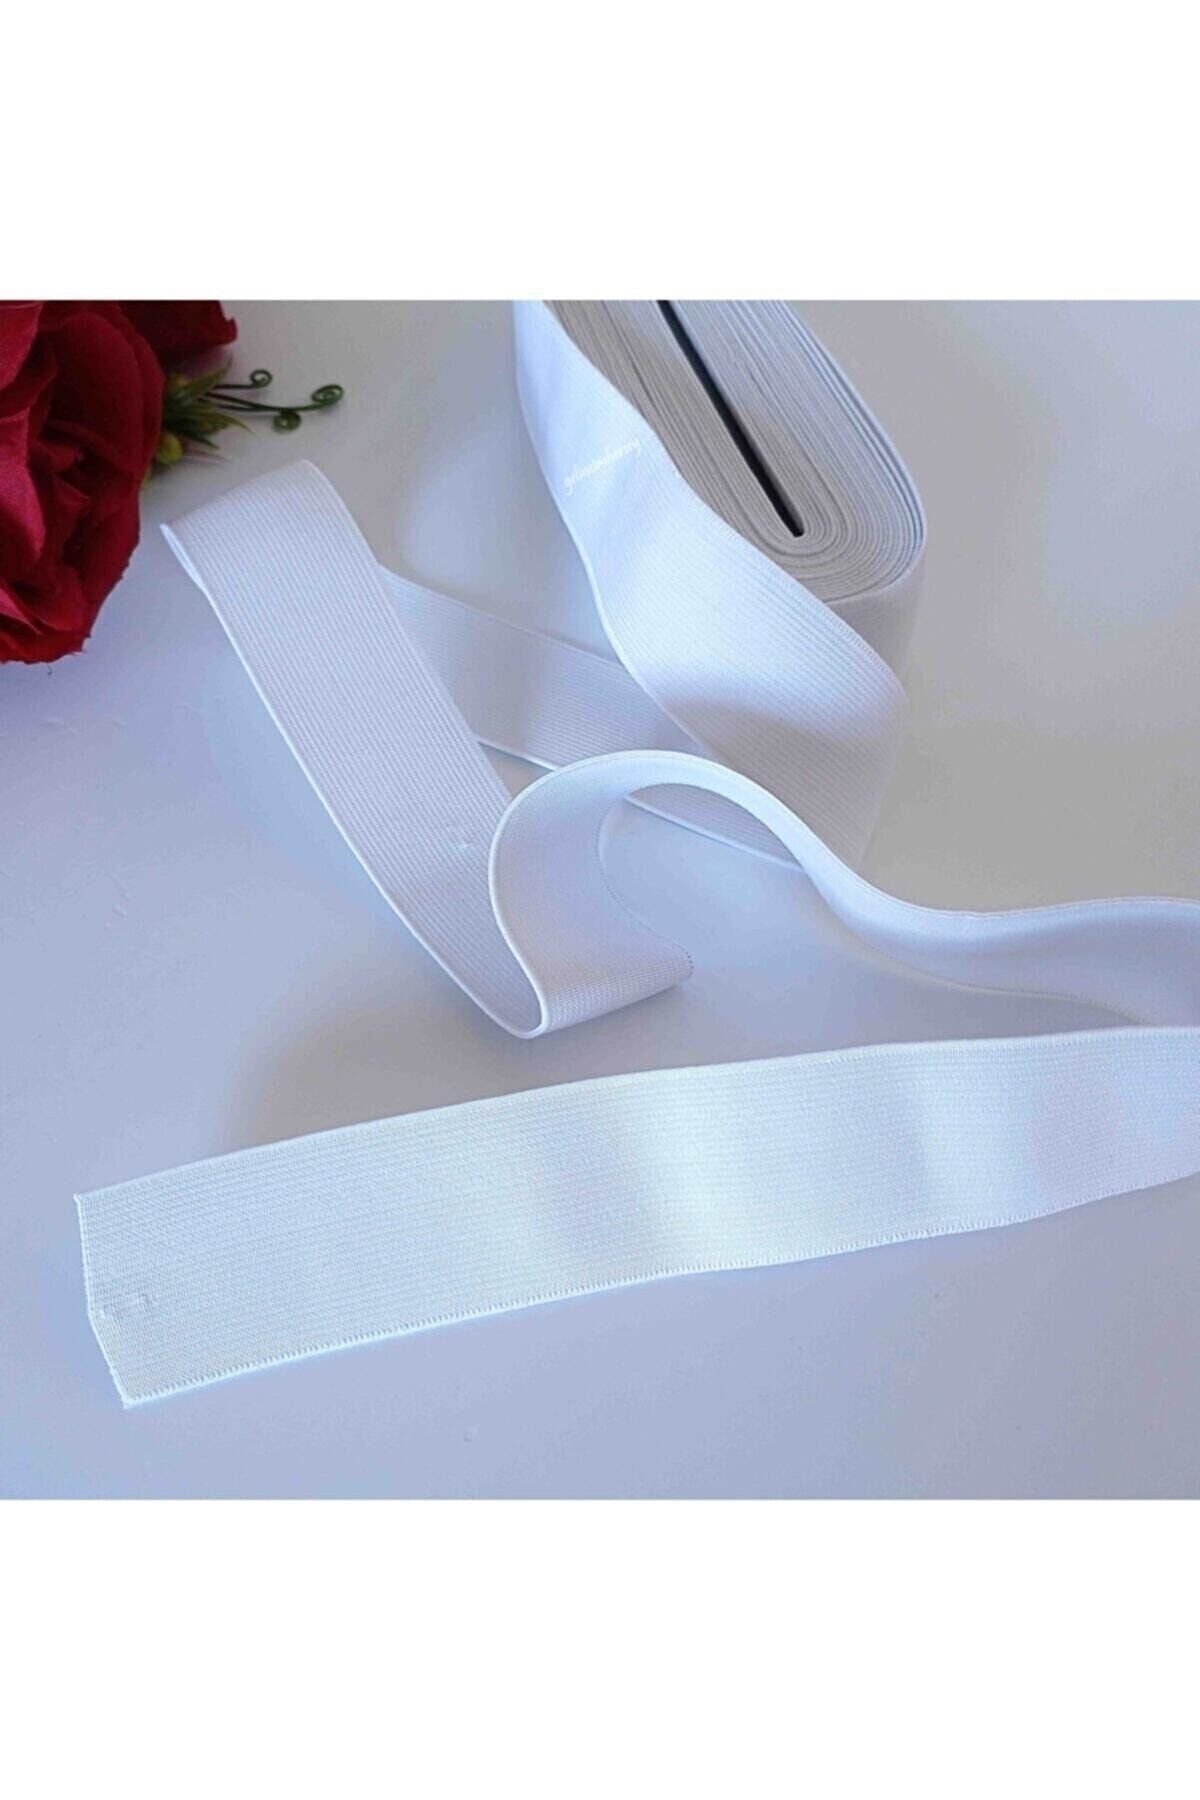 opc fashion White 10m Length 2.5cm Width Flat Woven Elastic Waist